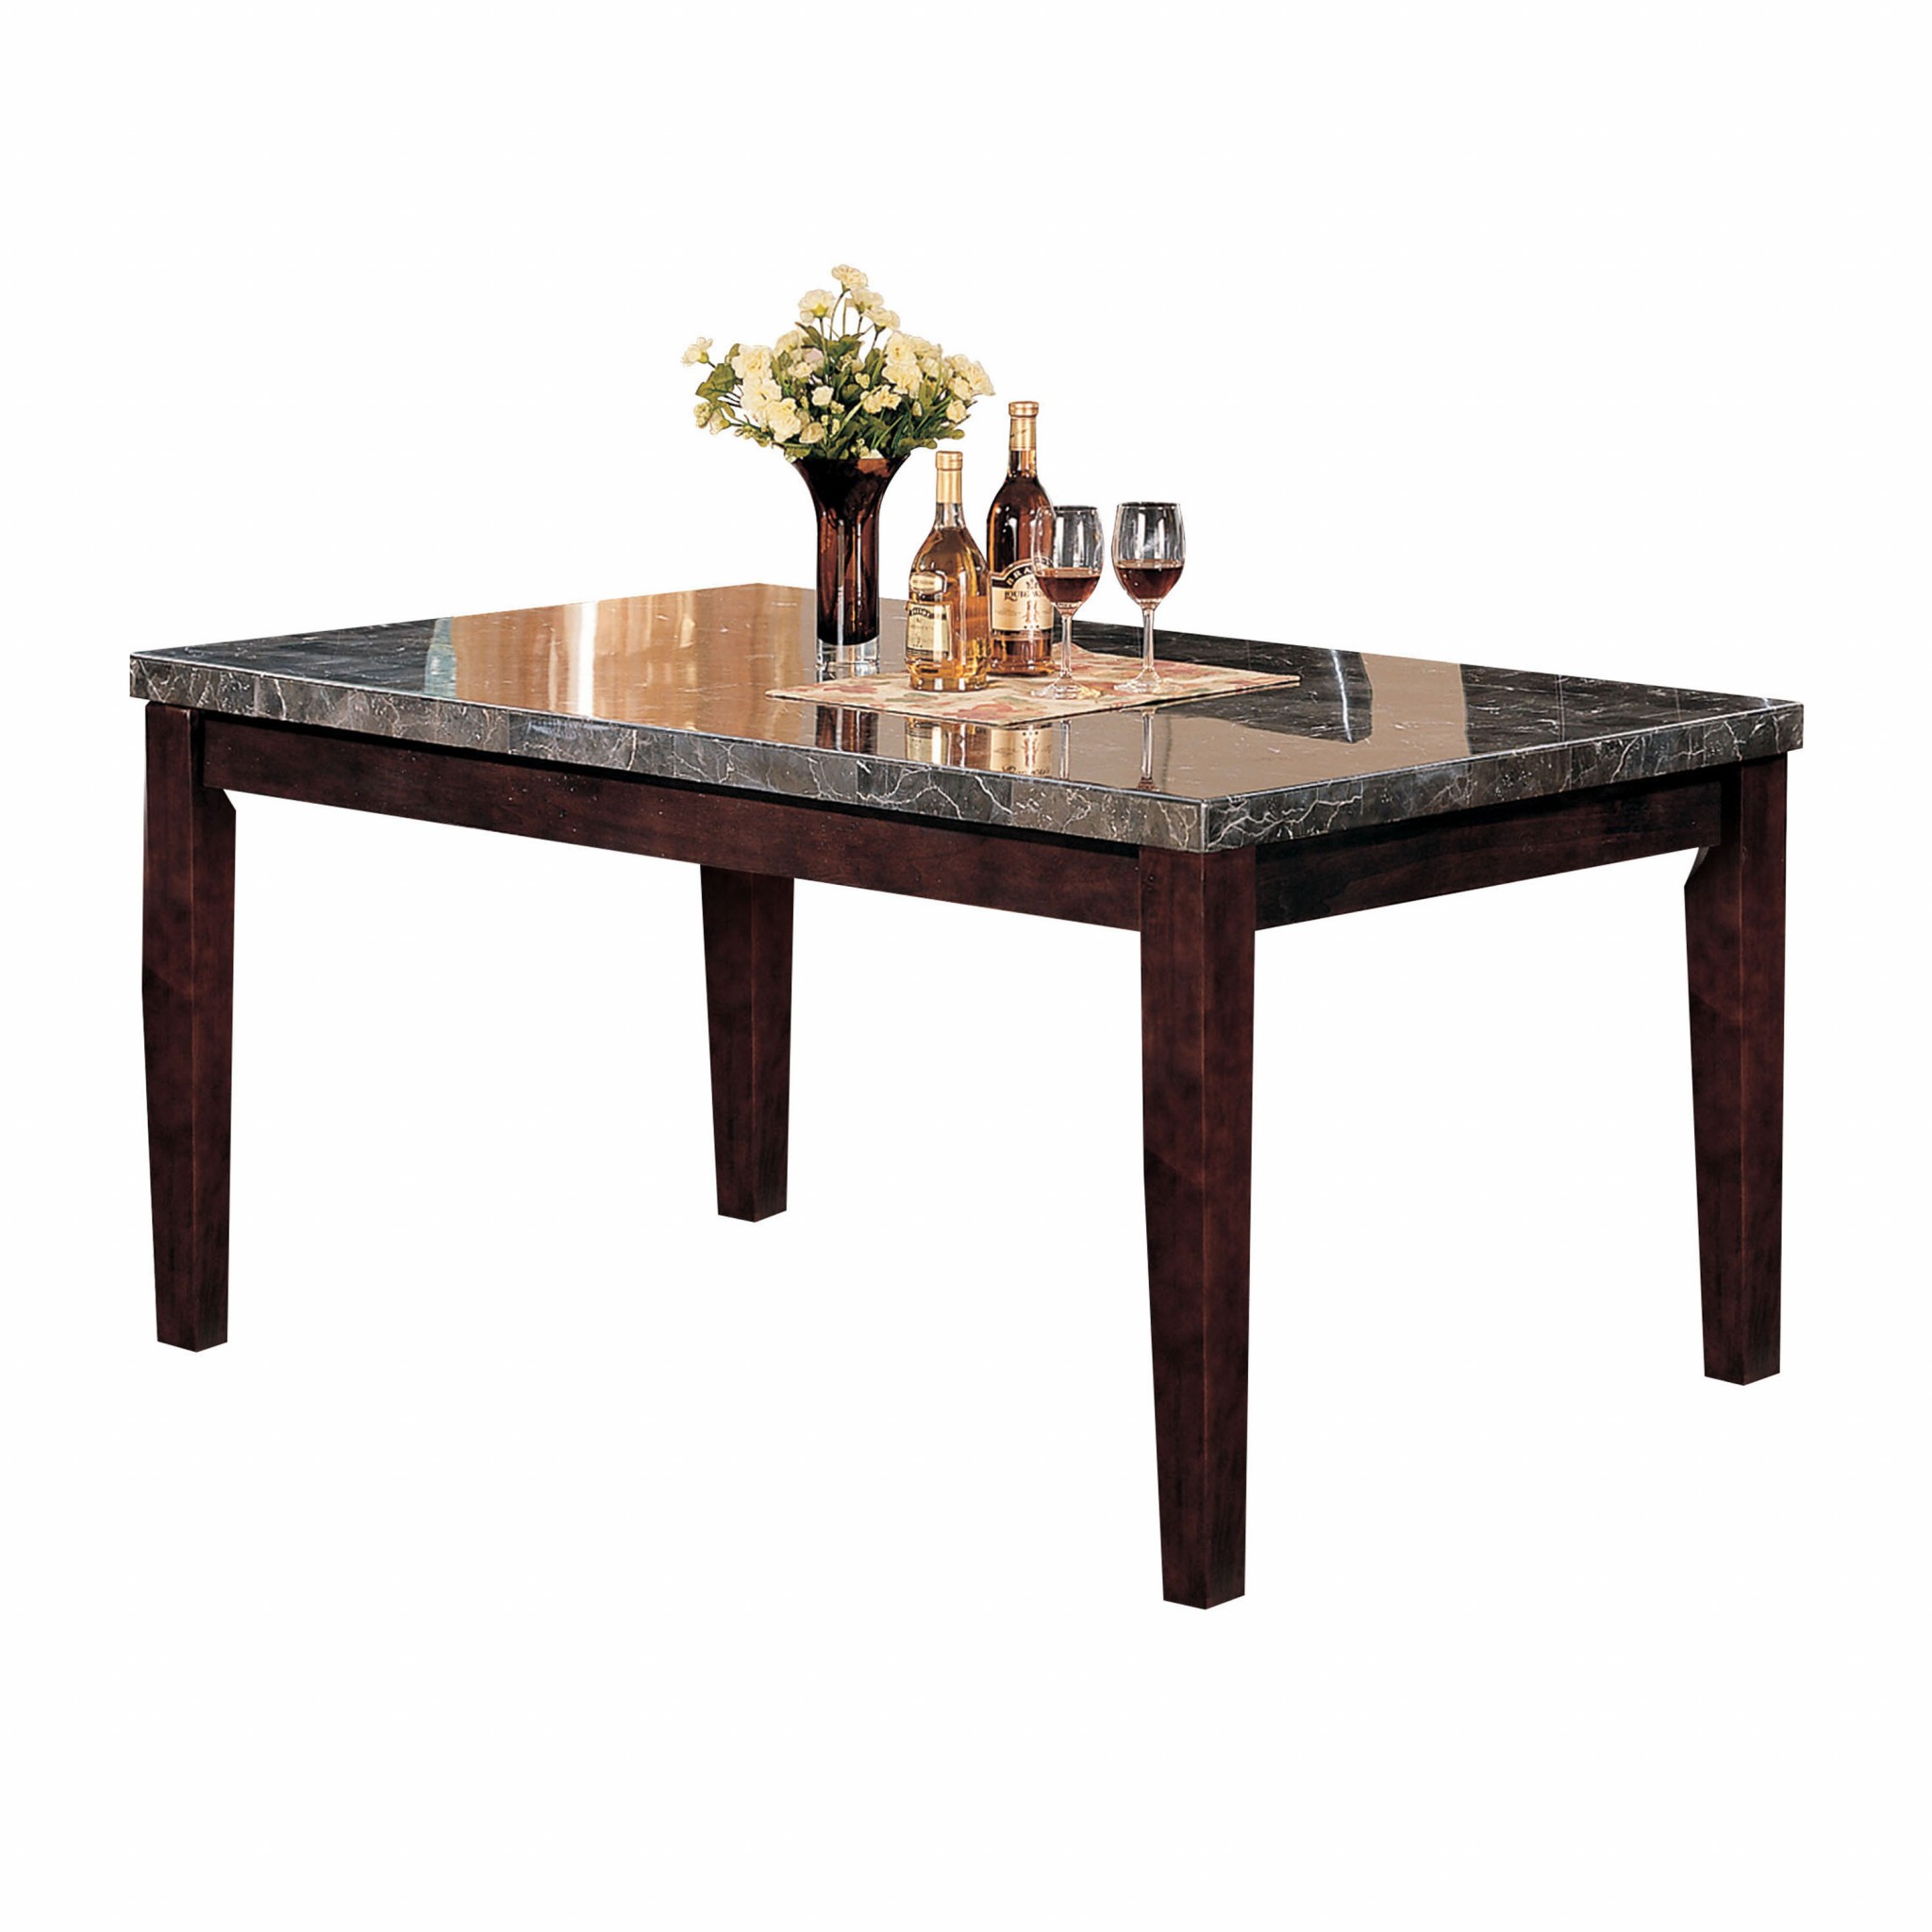 38" X 64" X 31" Black Marble Walnut Wood Dining Table